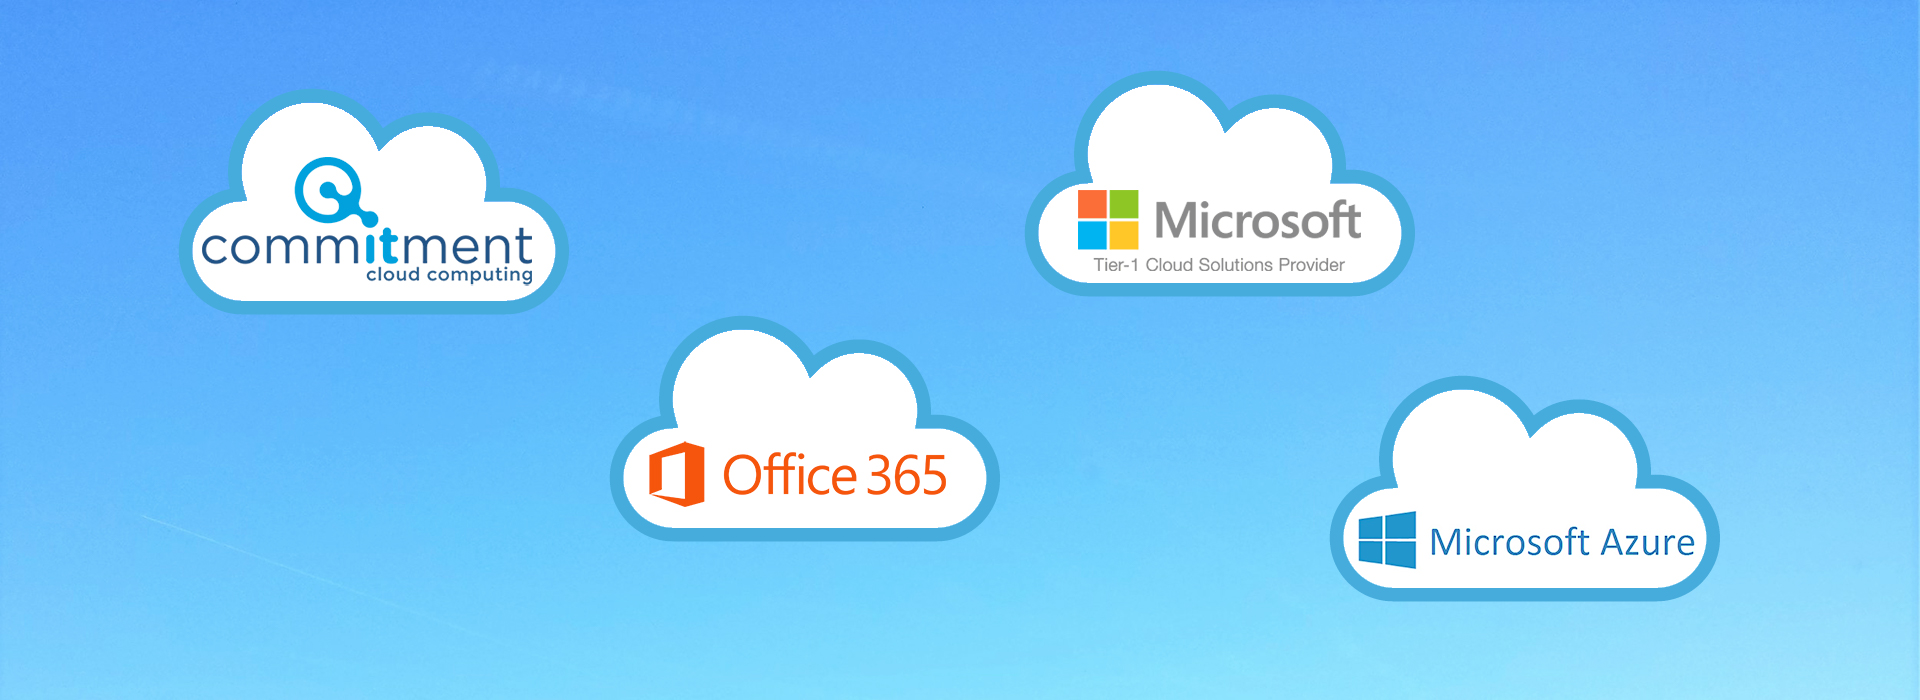 Microsoft Tier 1 Cloud Solution Provider Office 365 en Azure - CommITment